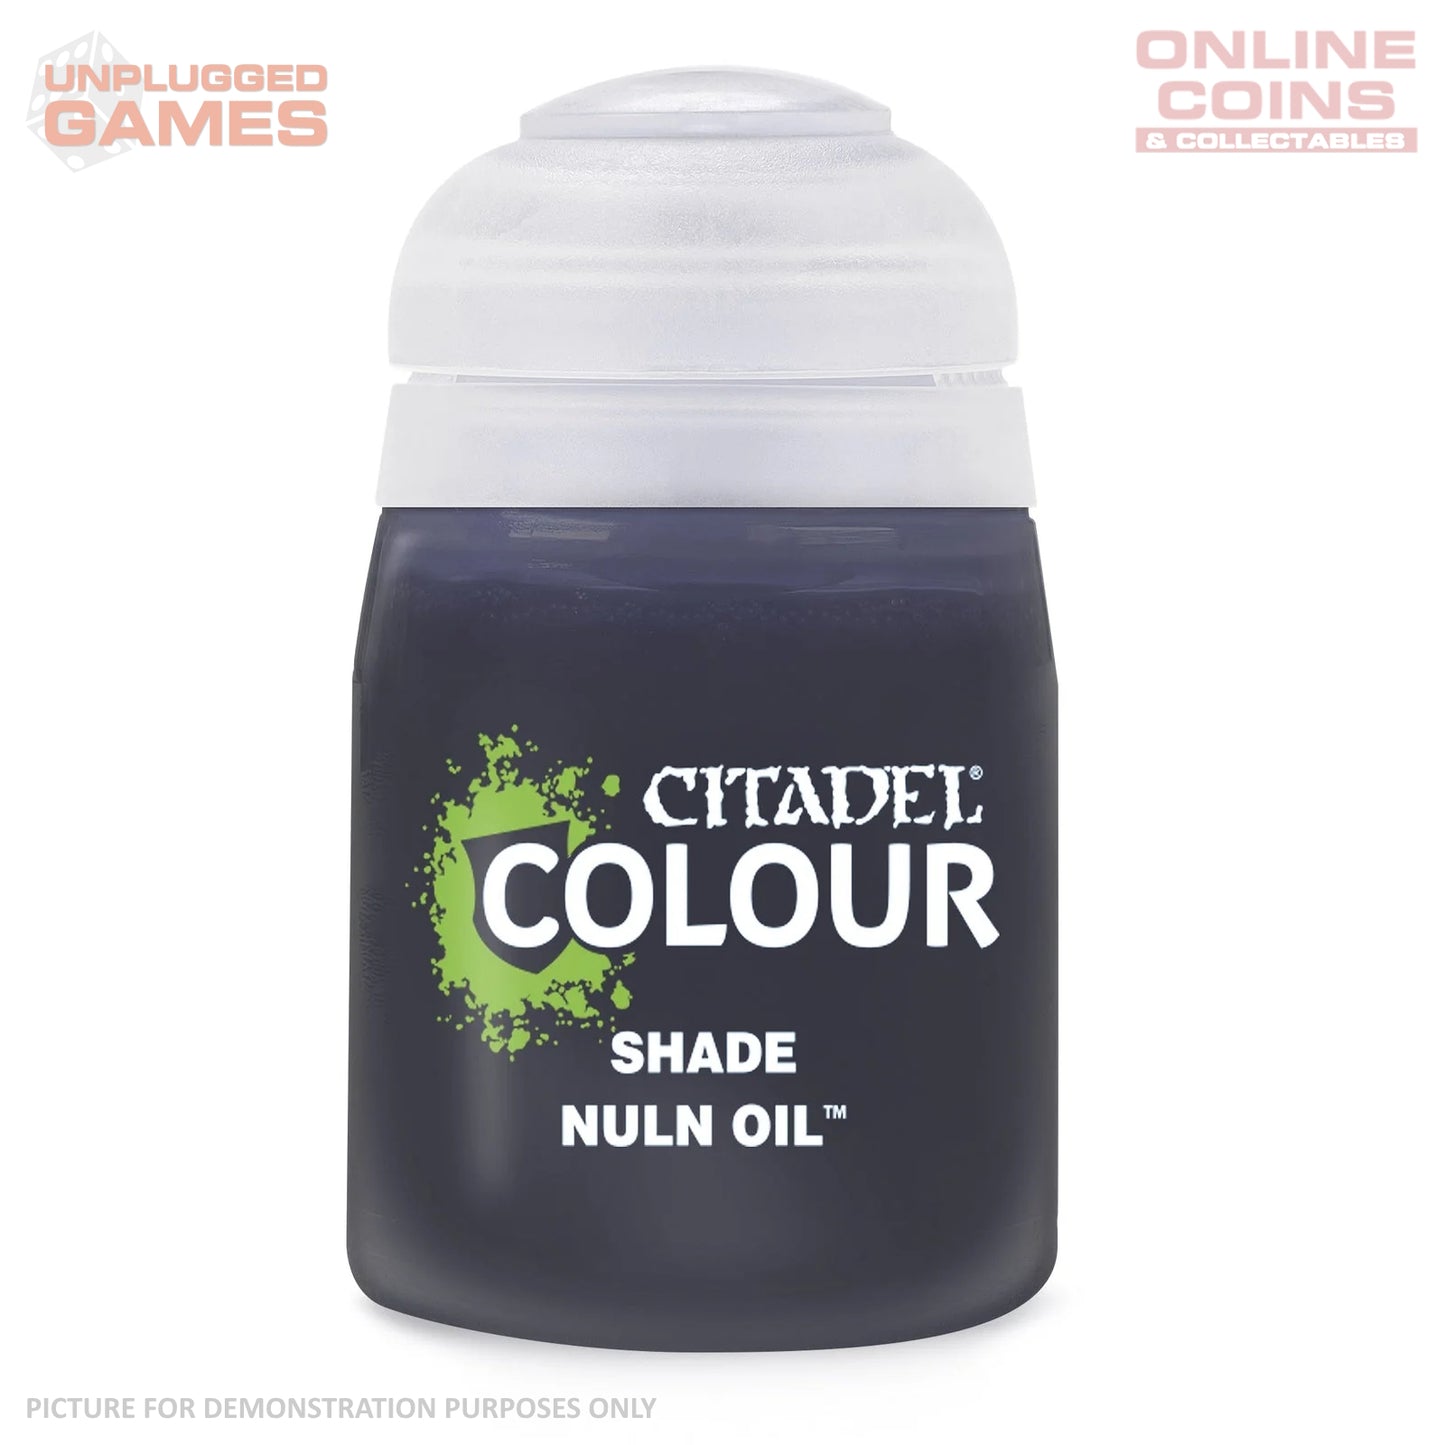 Citadel Shade - 24-14 Nuln Oil